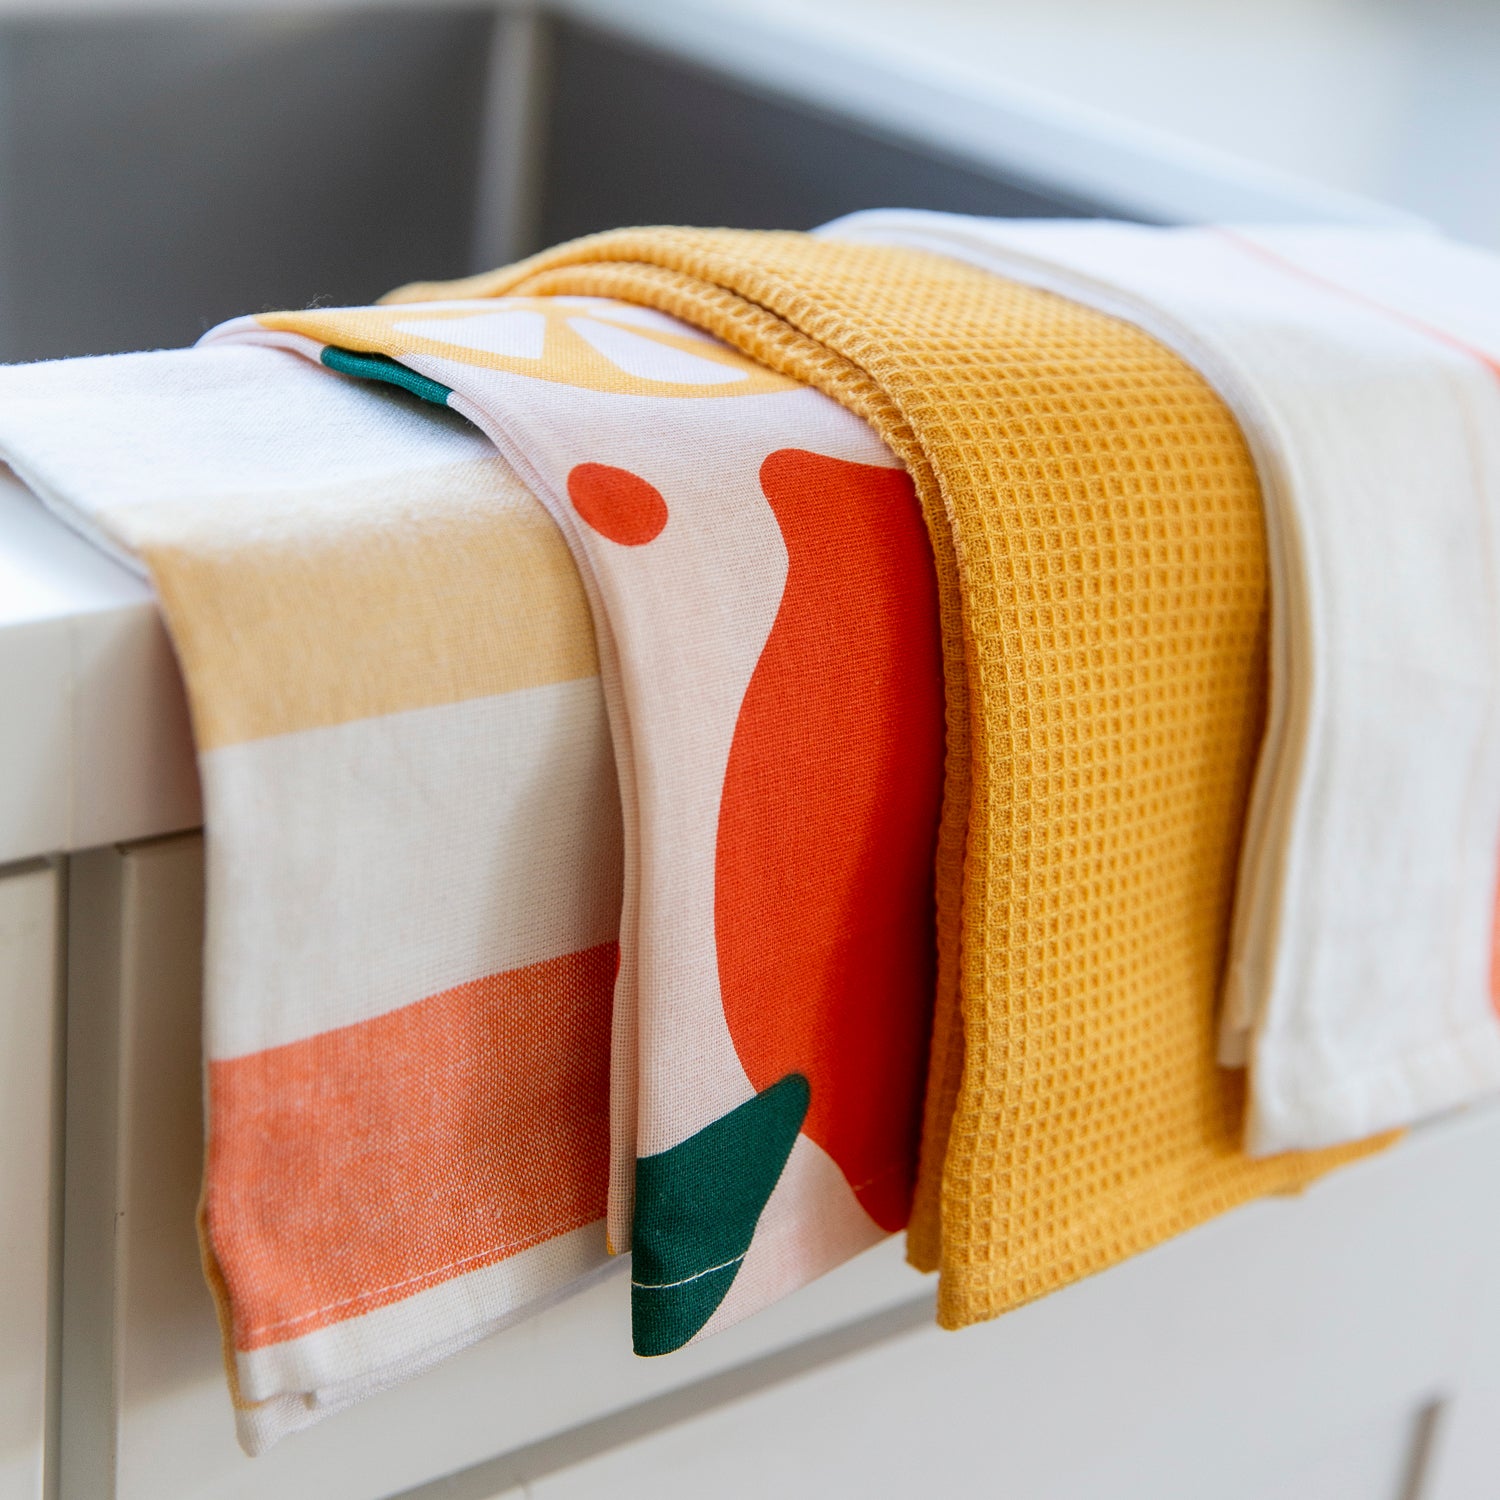 Beisseid Kitchen Dish Towels, Orange Slice Dish Cloth Fingertip Bath Towels  Cloth Fruit Pattern Hand Drying Soft Cotton Tea Towel Set, 18x28in 2PCS